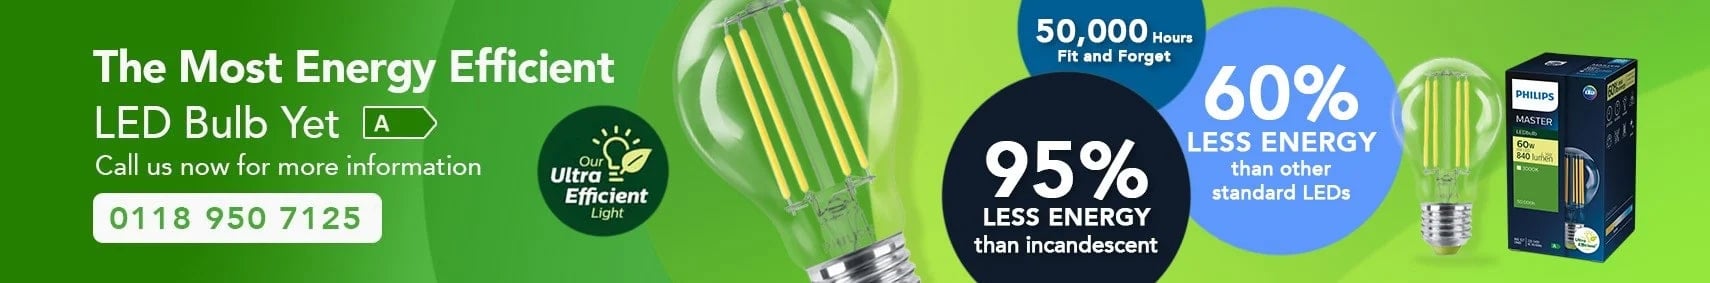 Ultra Efficient LED Light Bulbs